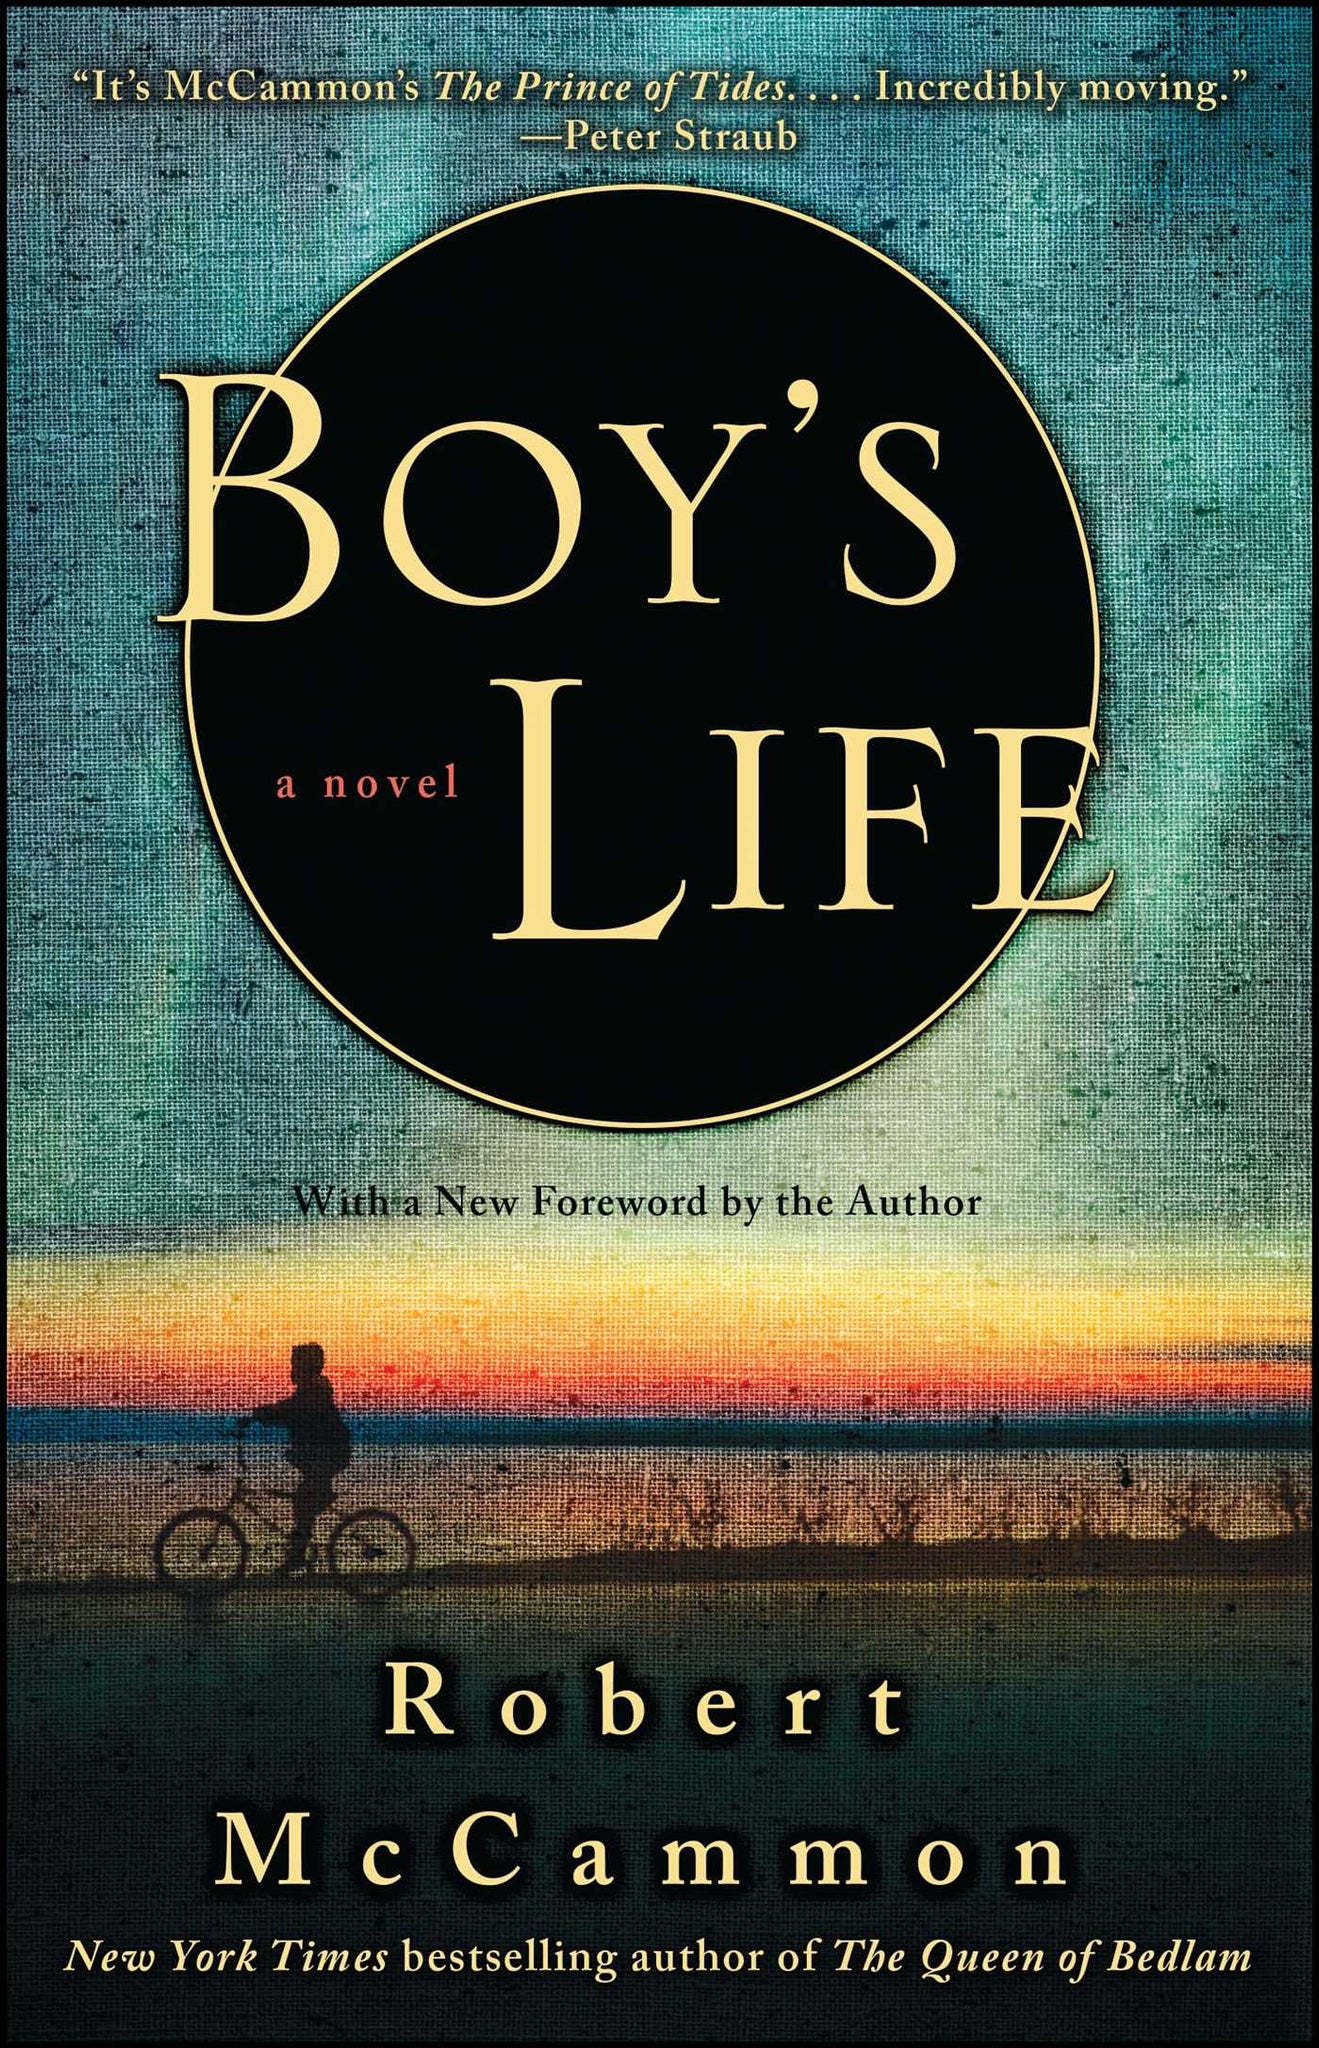 Boy's Life by Robert McCammon - tpbk